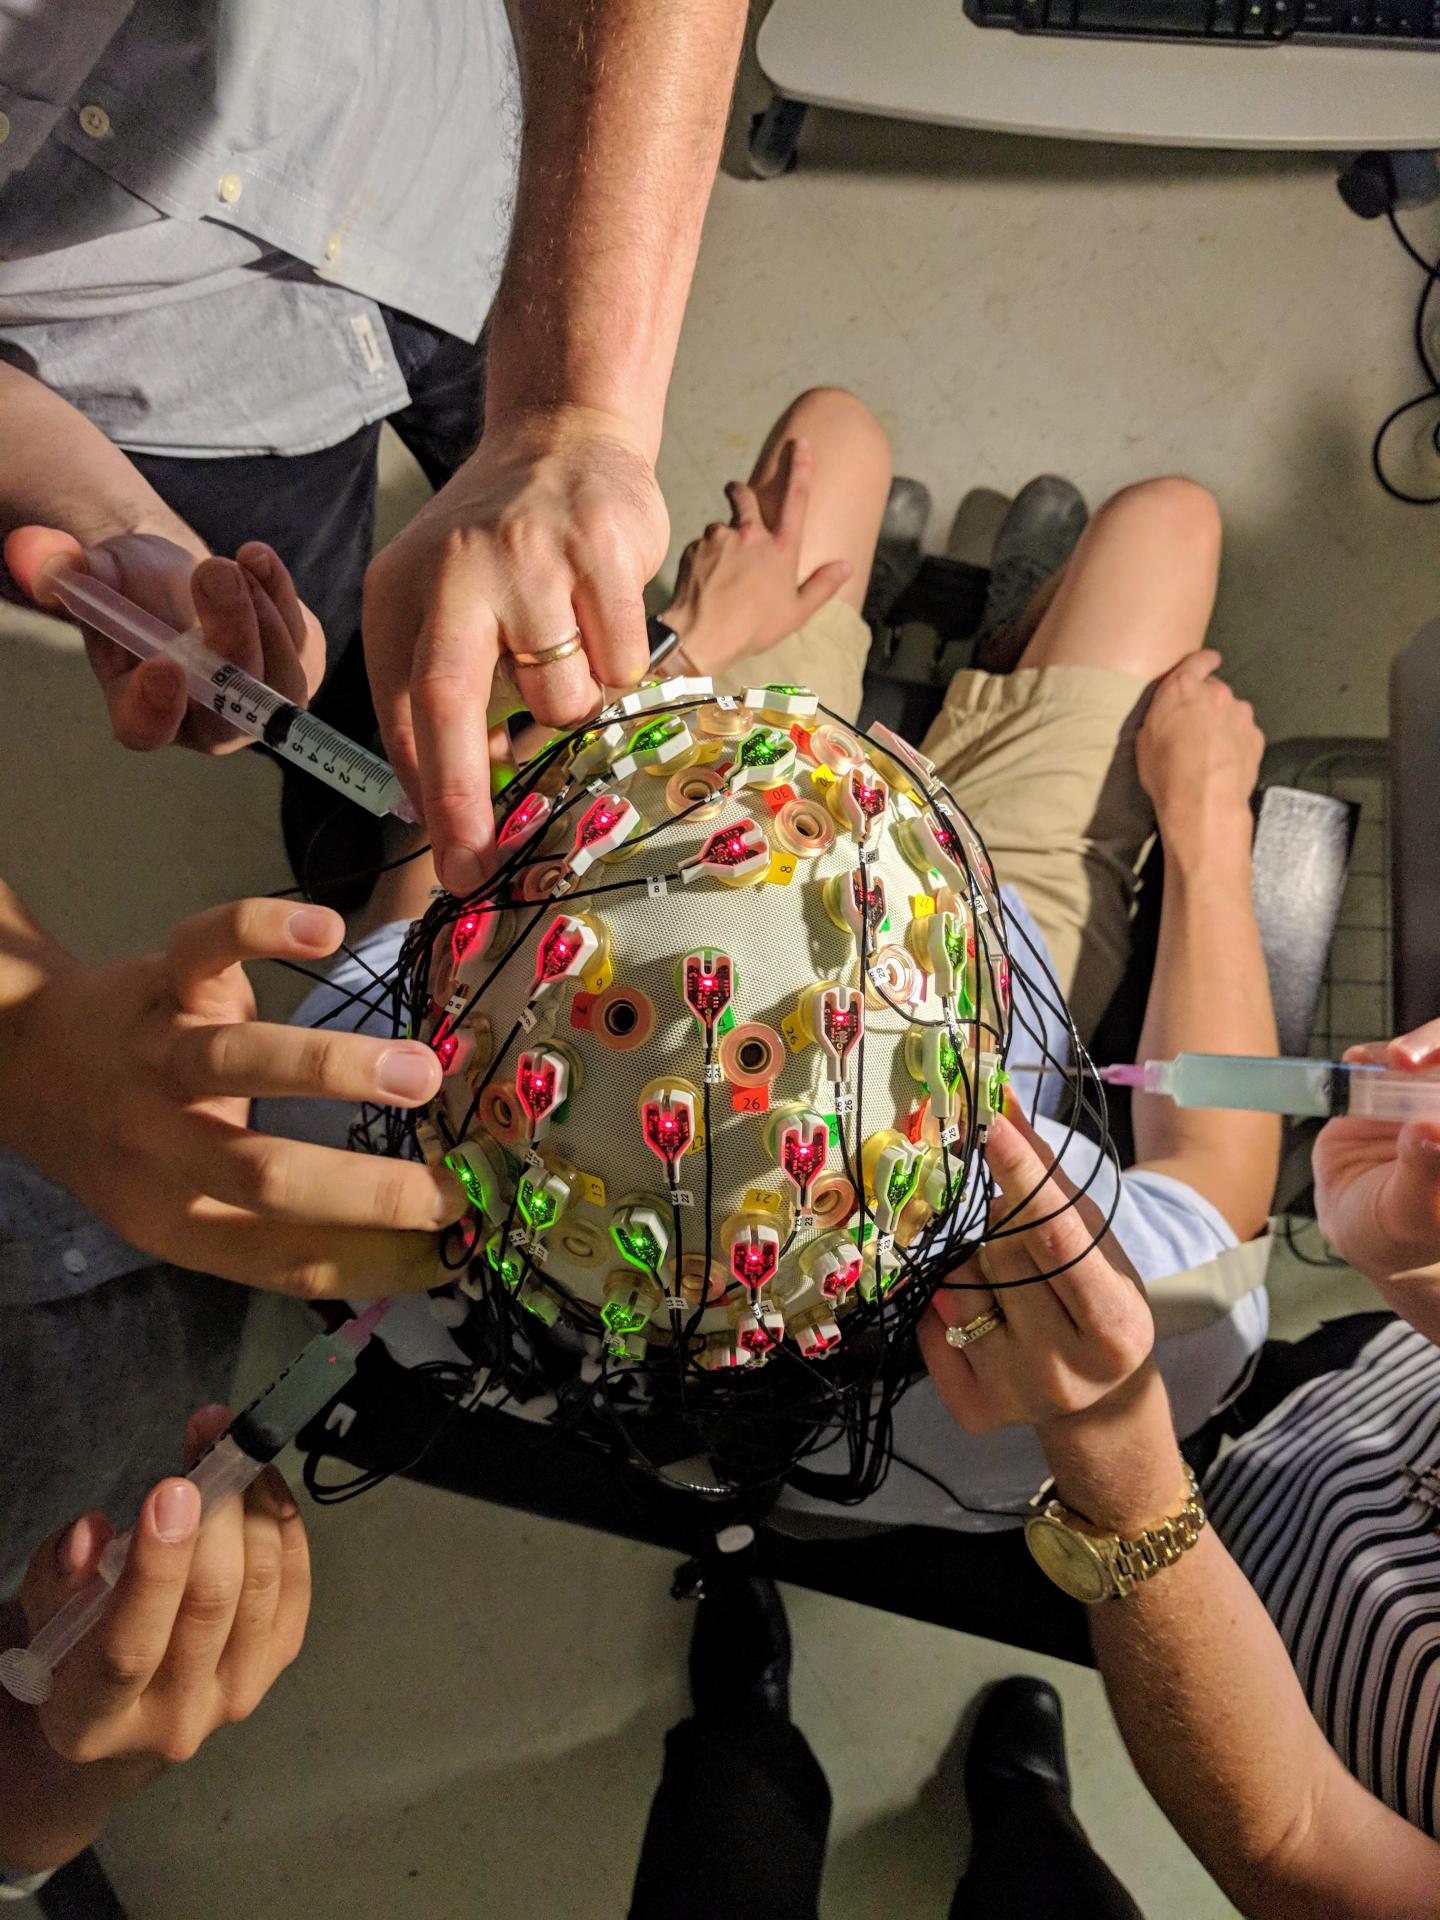 test subject in EEG cap